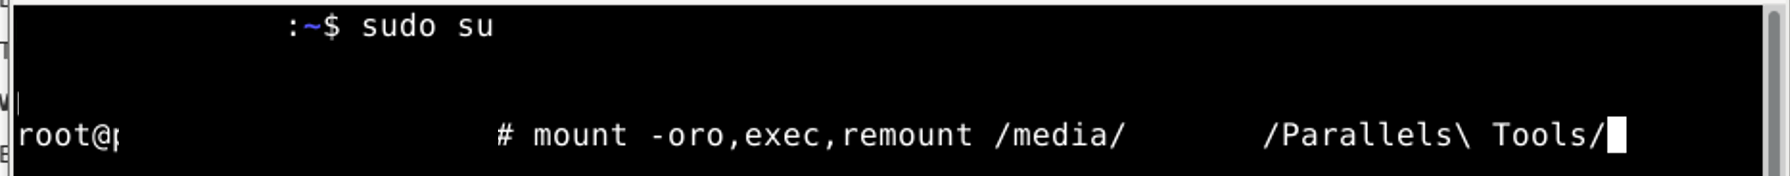 executing command in terminal emulator